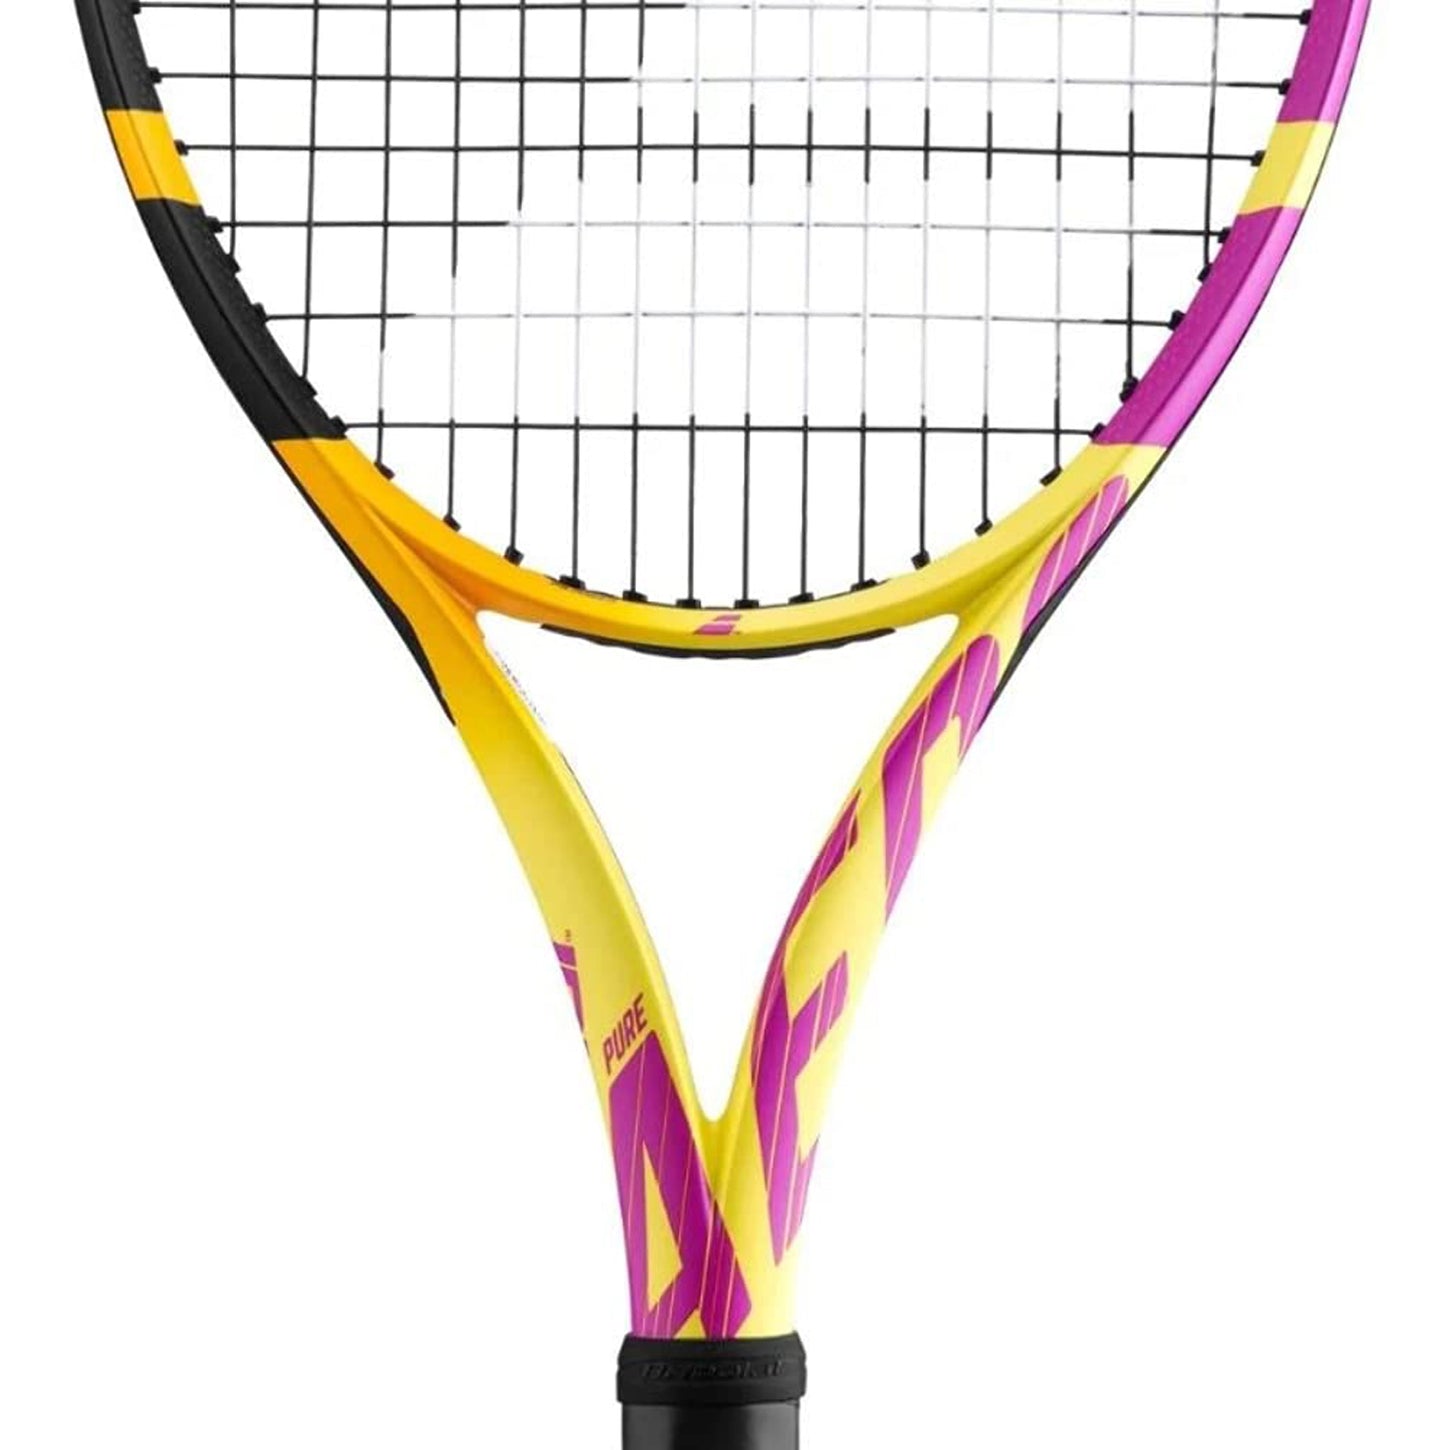 Babolat Pure Aero Rafa 2020 Unstrung Tennis Racquet - Best Price online Prokicksports.com